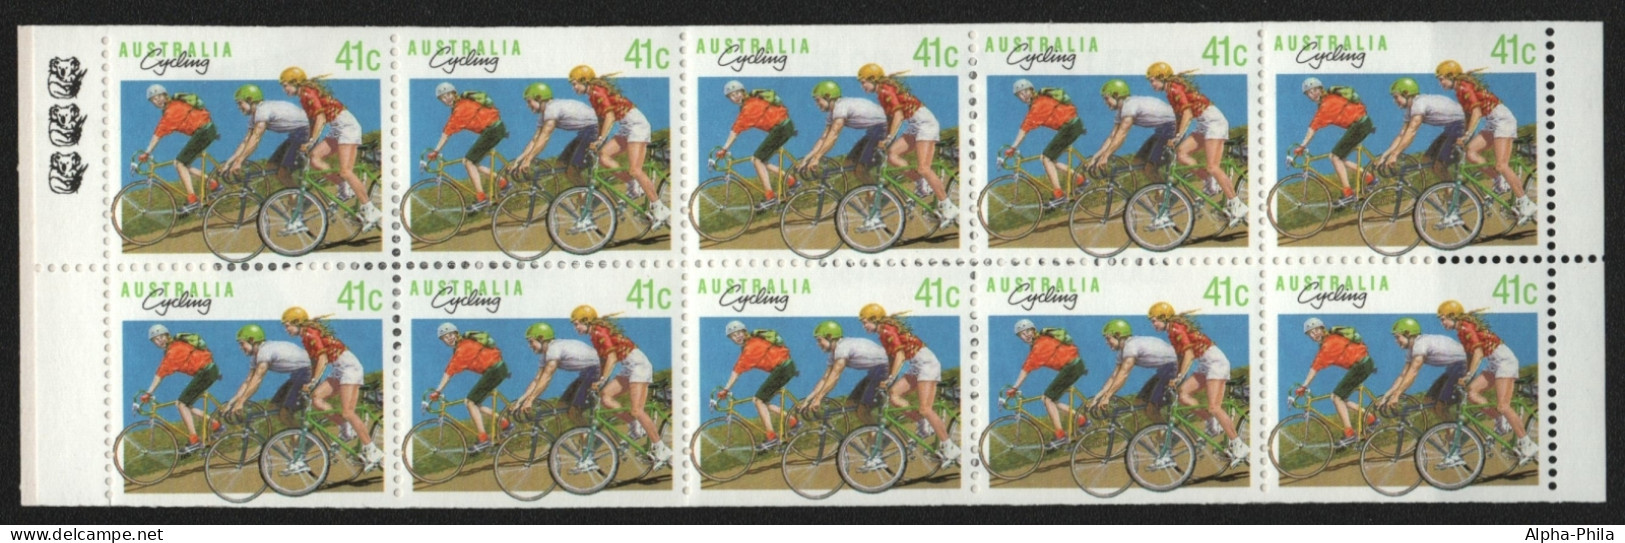 Australien 1989 - Mi-Nr. 1165 D ** - MNH - MH 0-63 - Radsport - Booklets